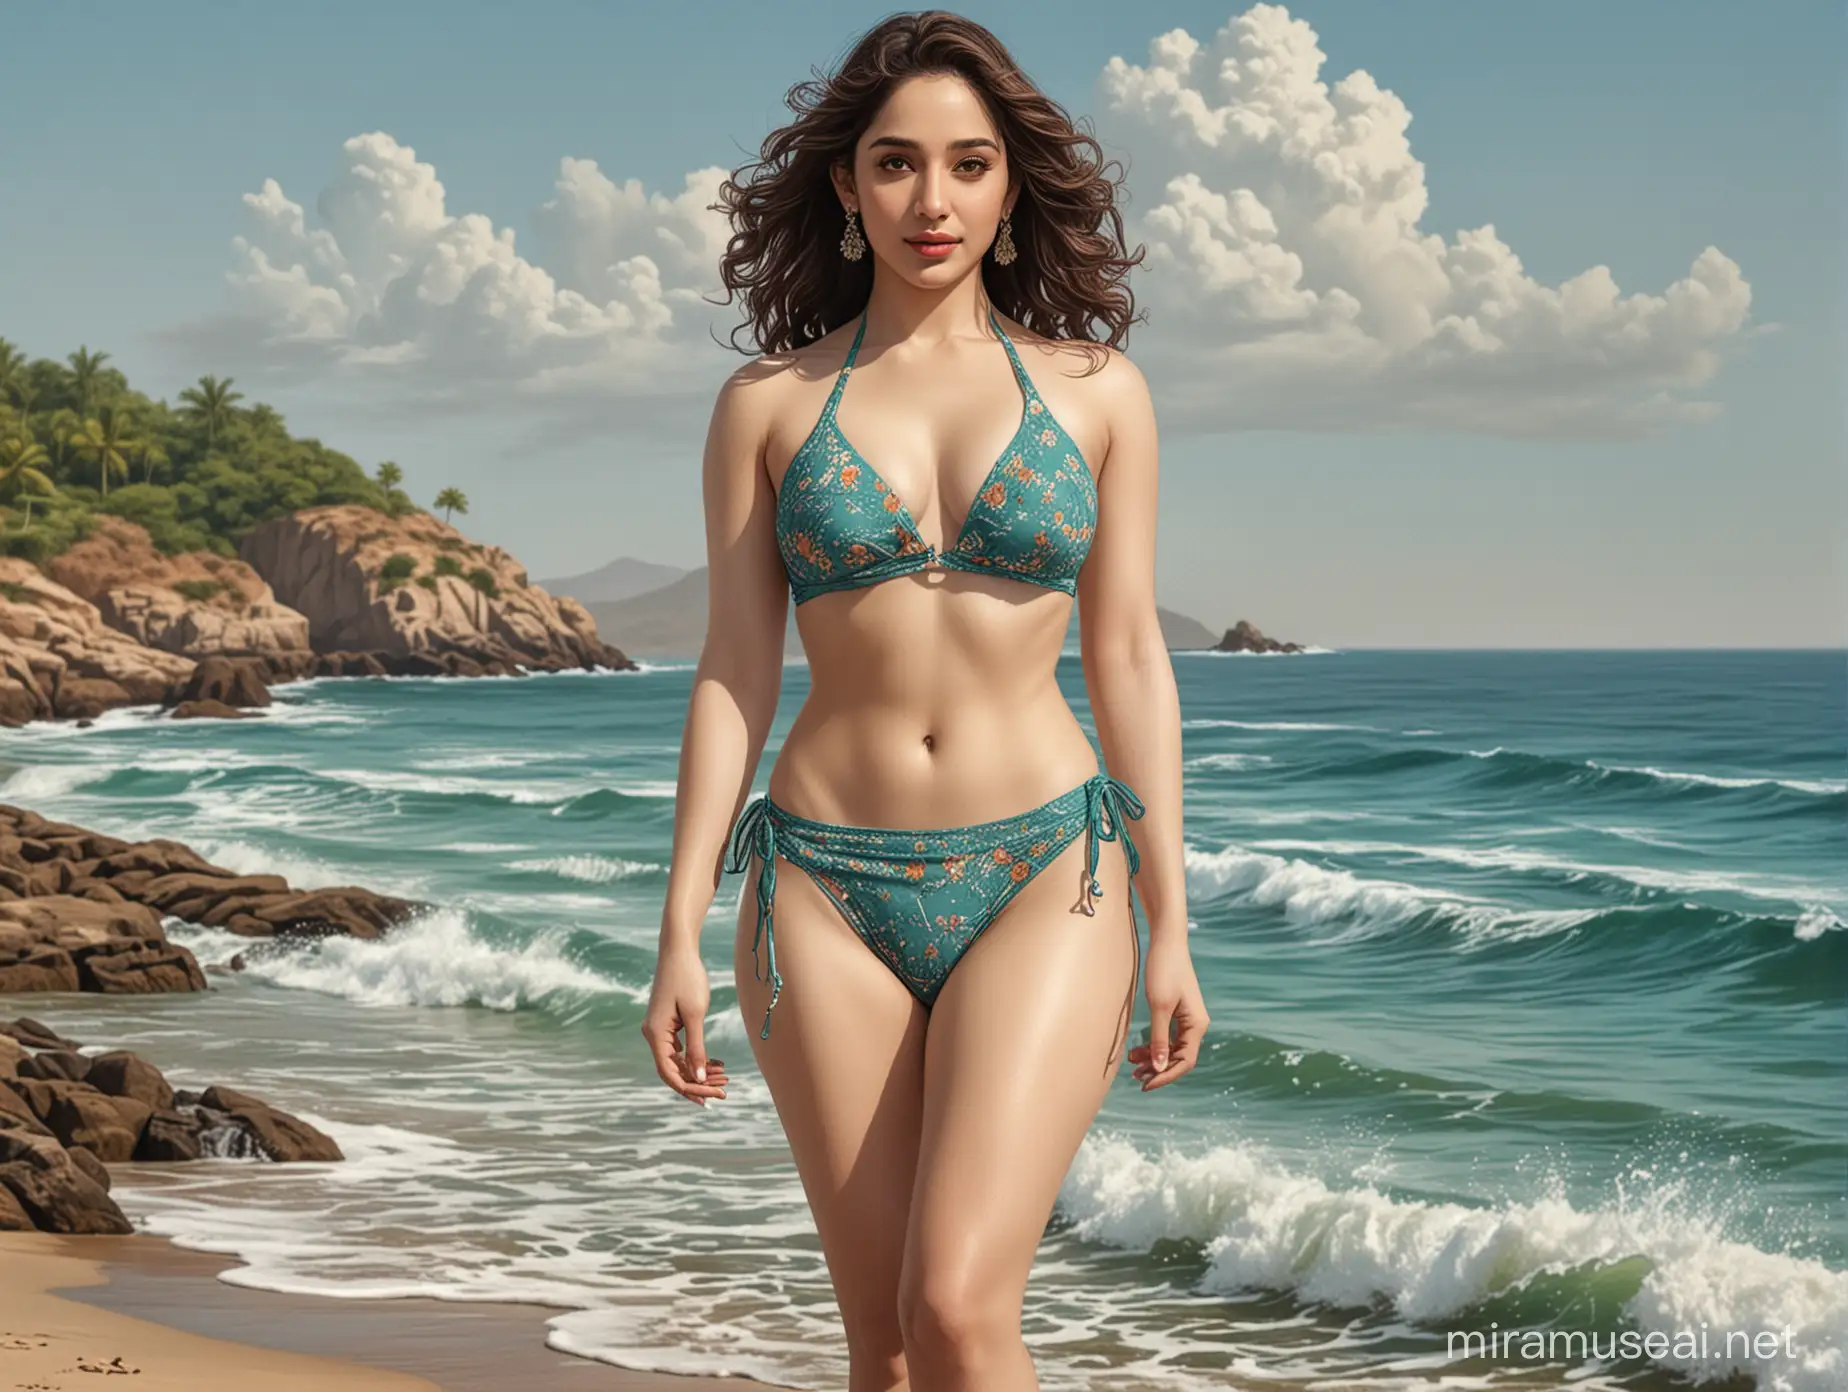 Tamanna Bhatia Modeling Bikini on Seaside Shore